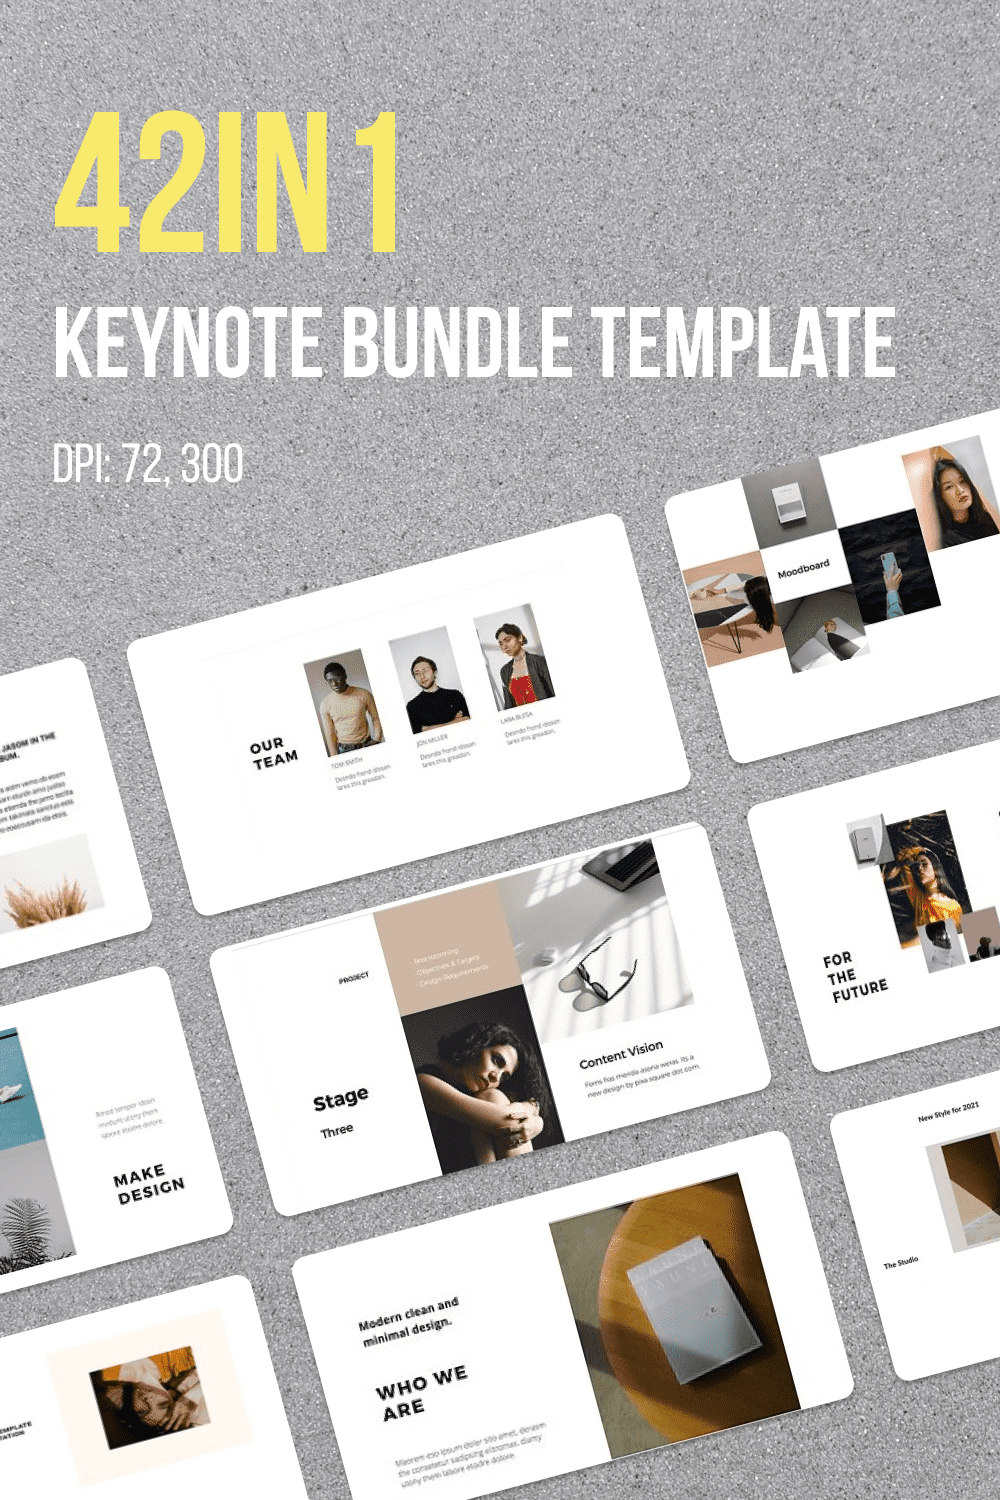 42in1 Keynote Bundle Template by MasterBundles Pinterest Collage Image.